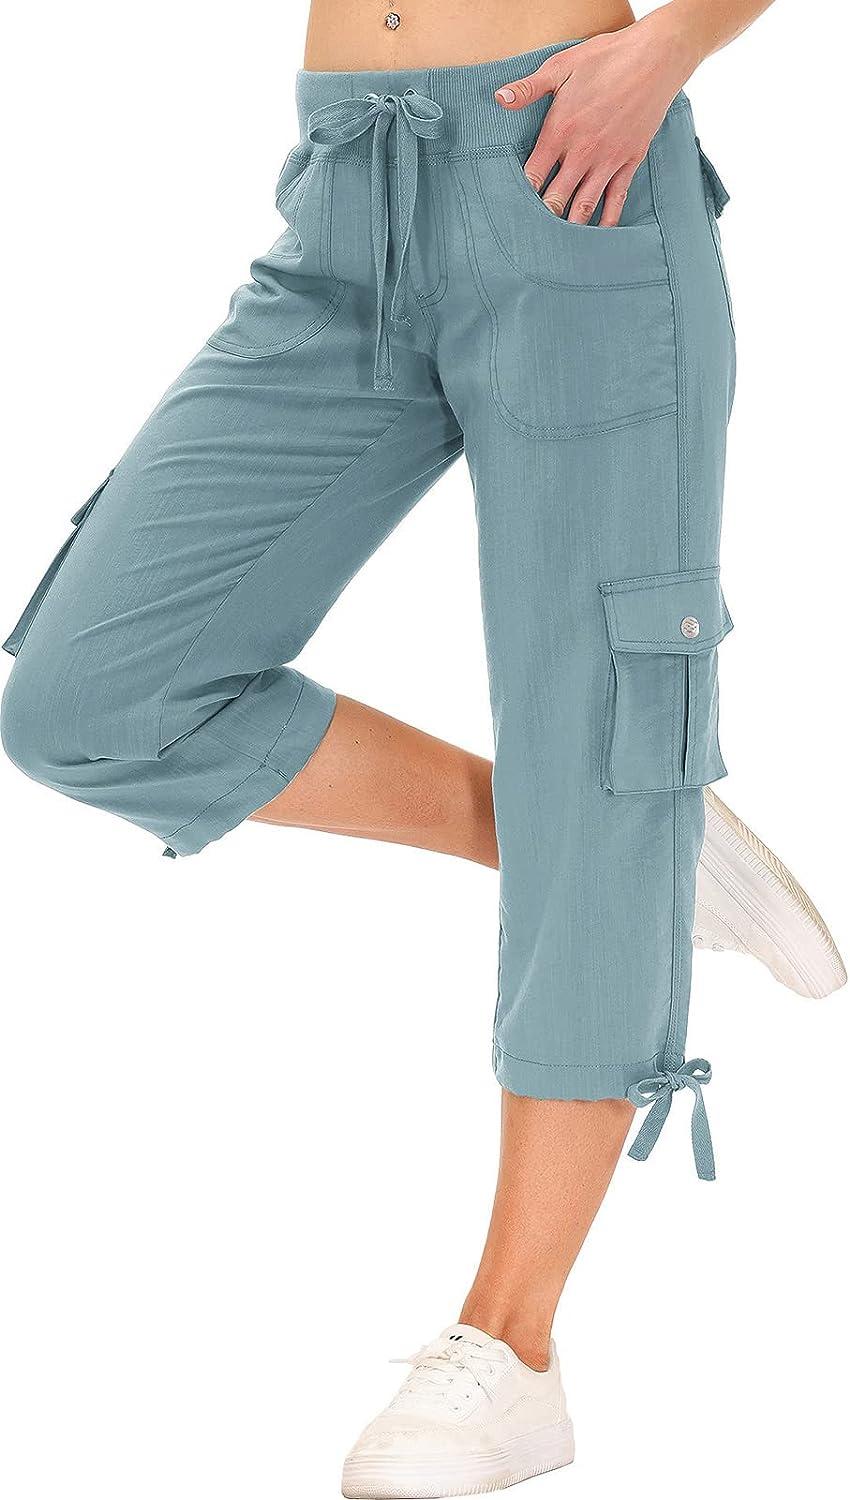 Women's Capris: Relaxed Fit Capri Pants, Denim Pants